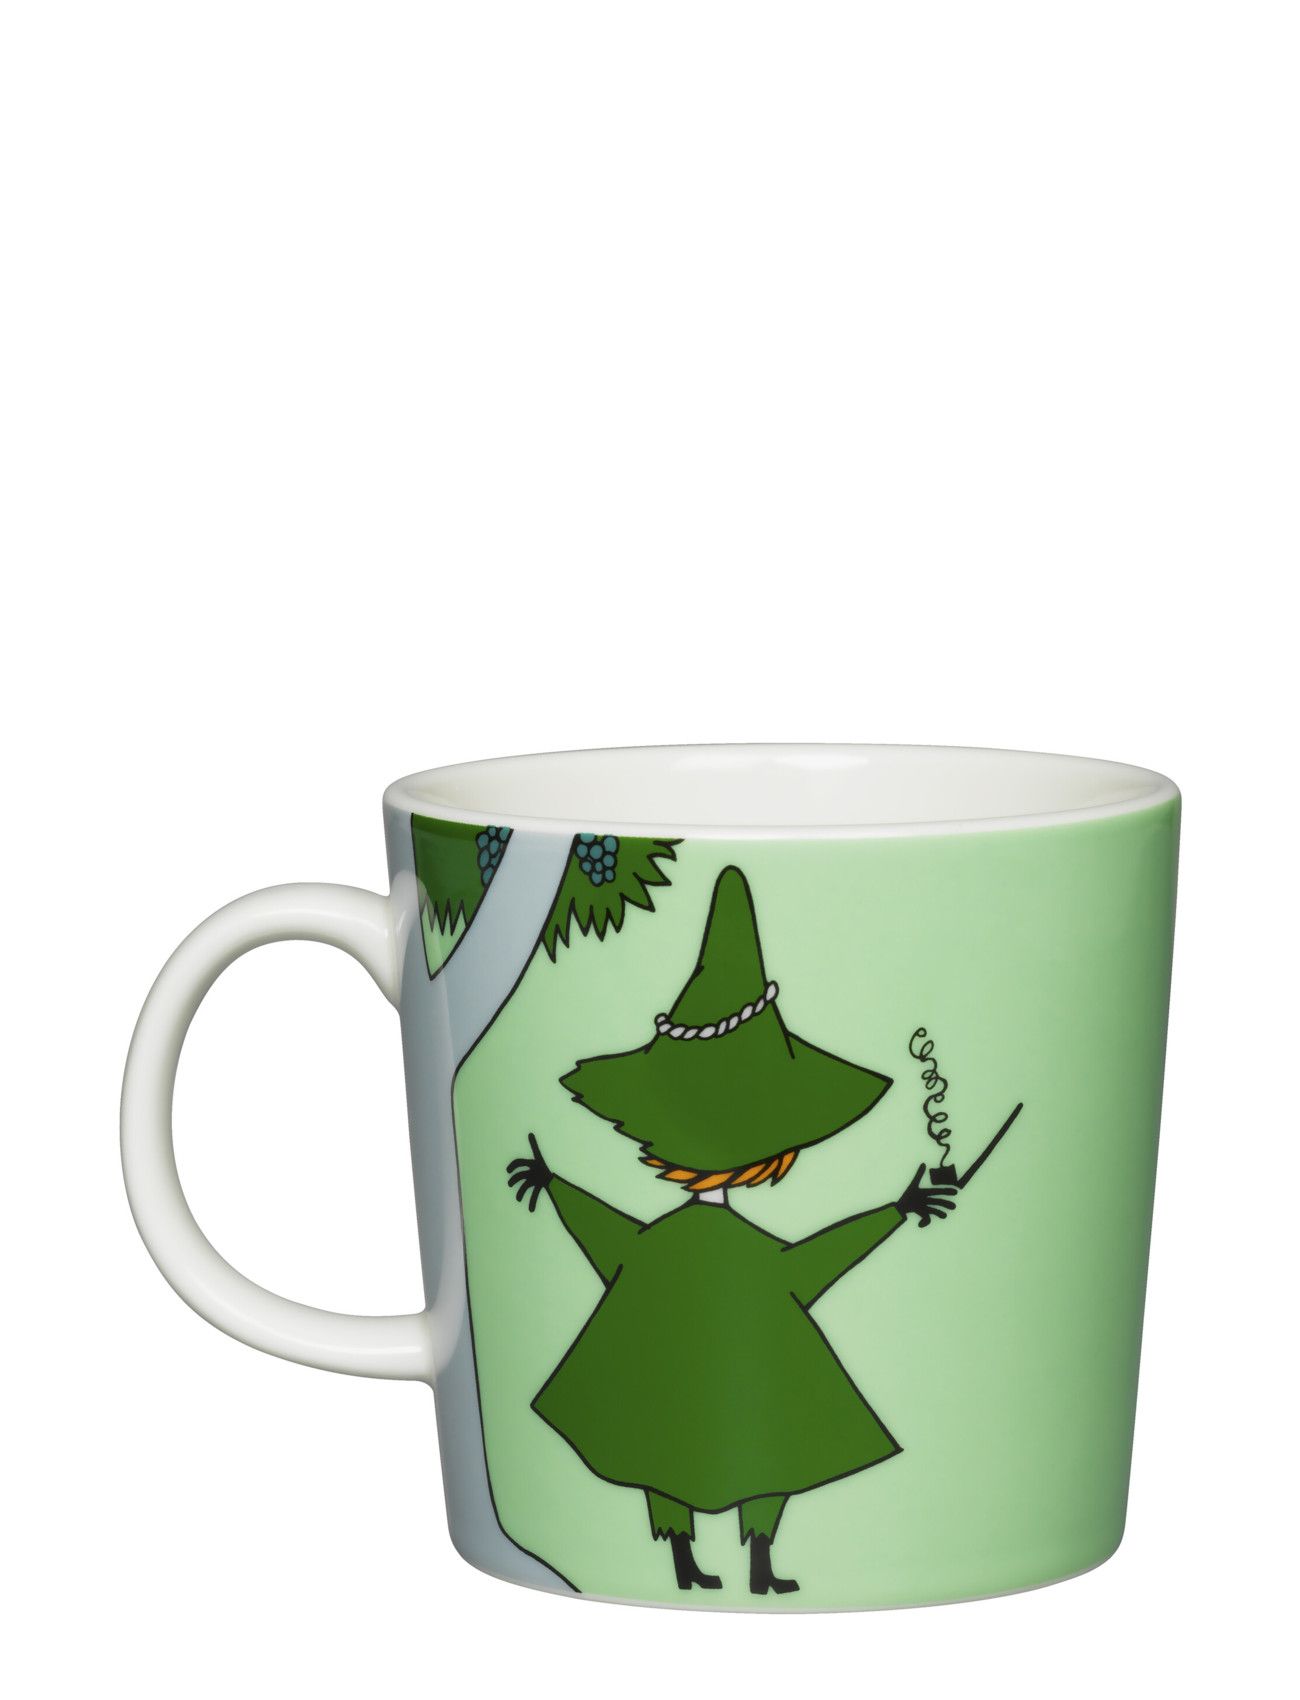 Moomin Mug 0,3L Snufkin Home Tableware Cups & Mugs Coffee Cups Multi/patterned Arabia